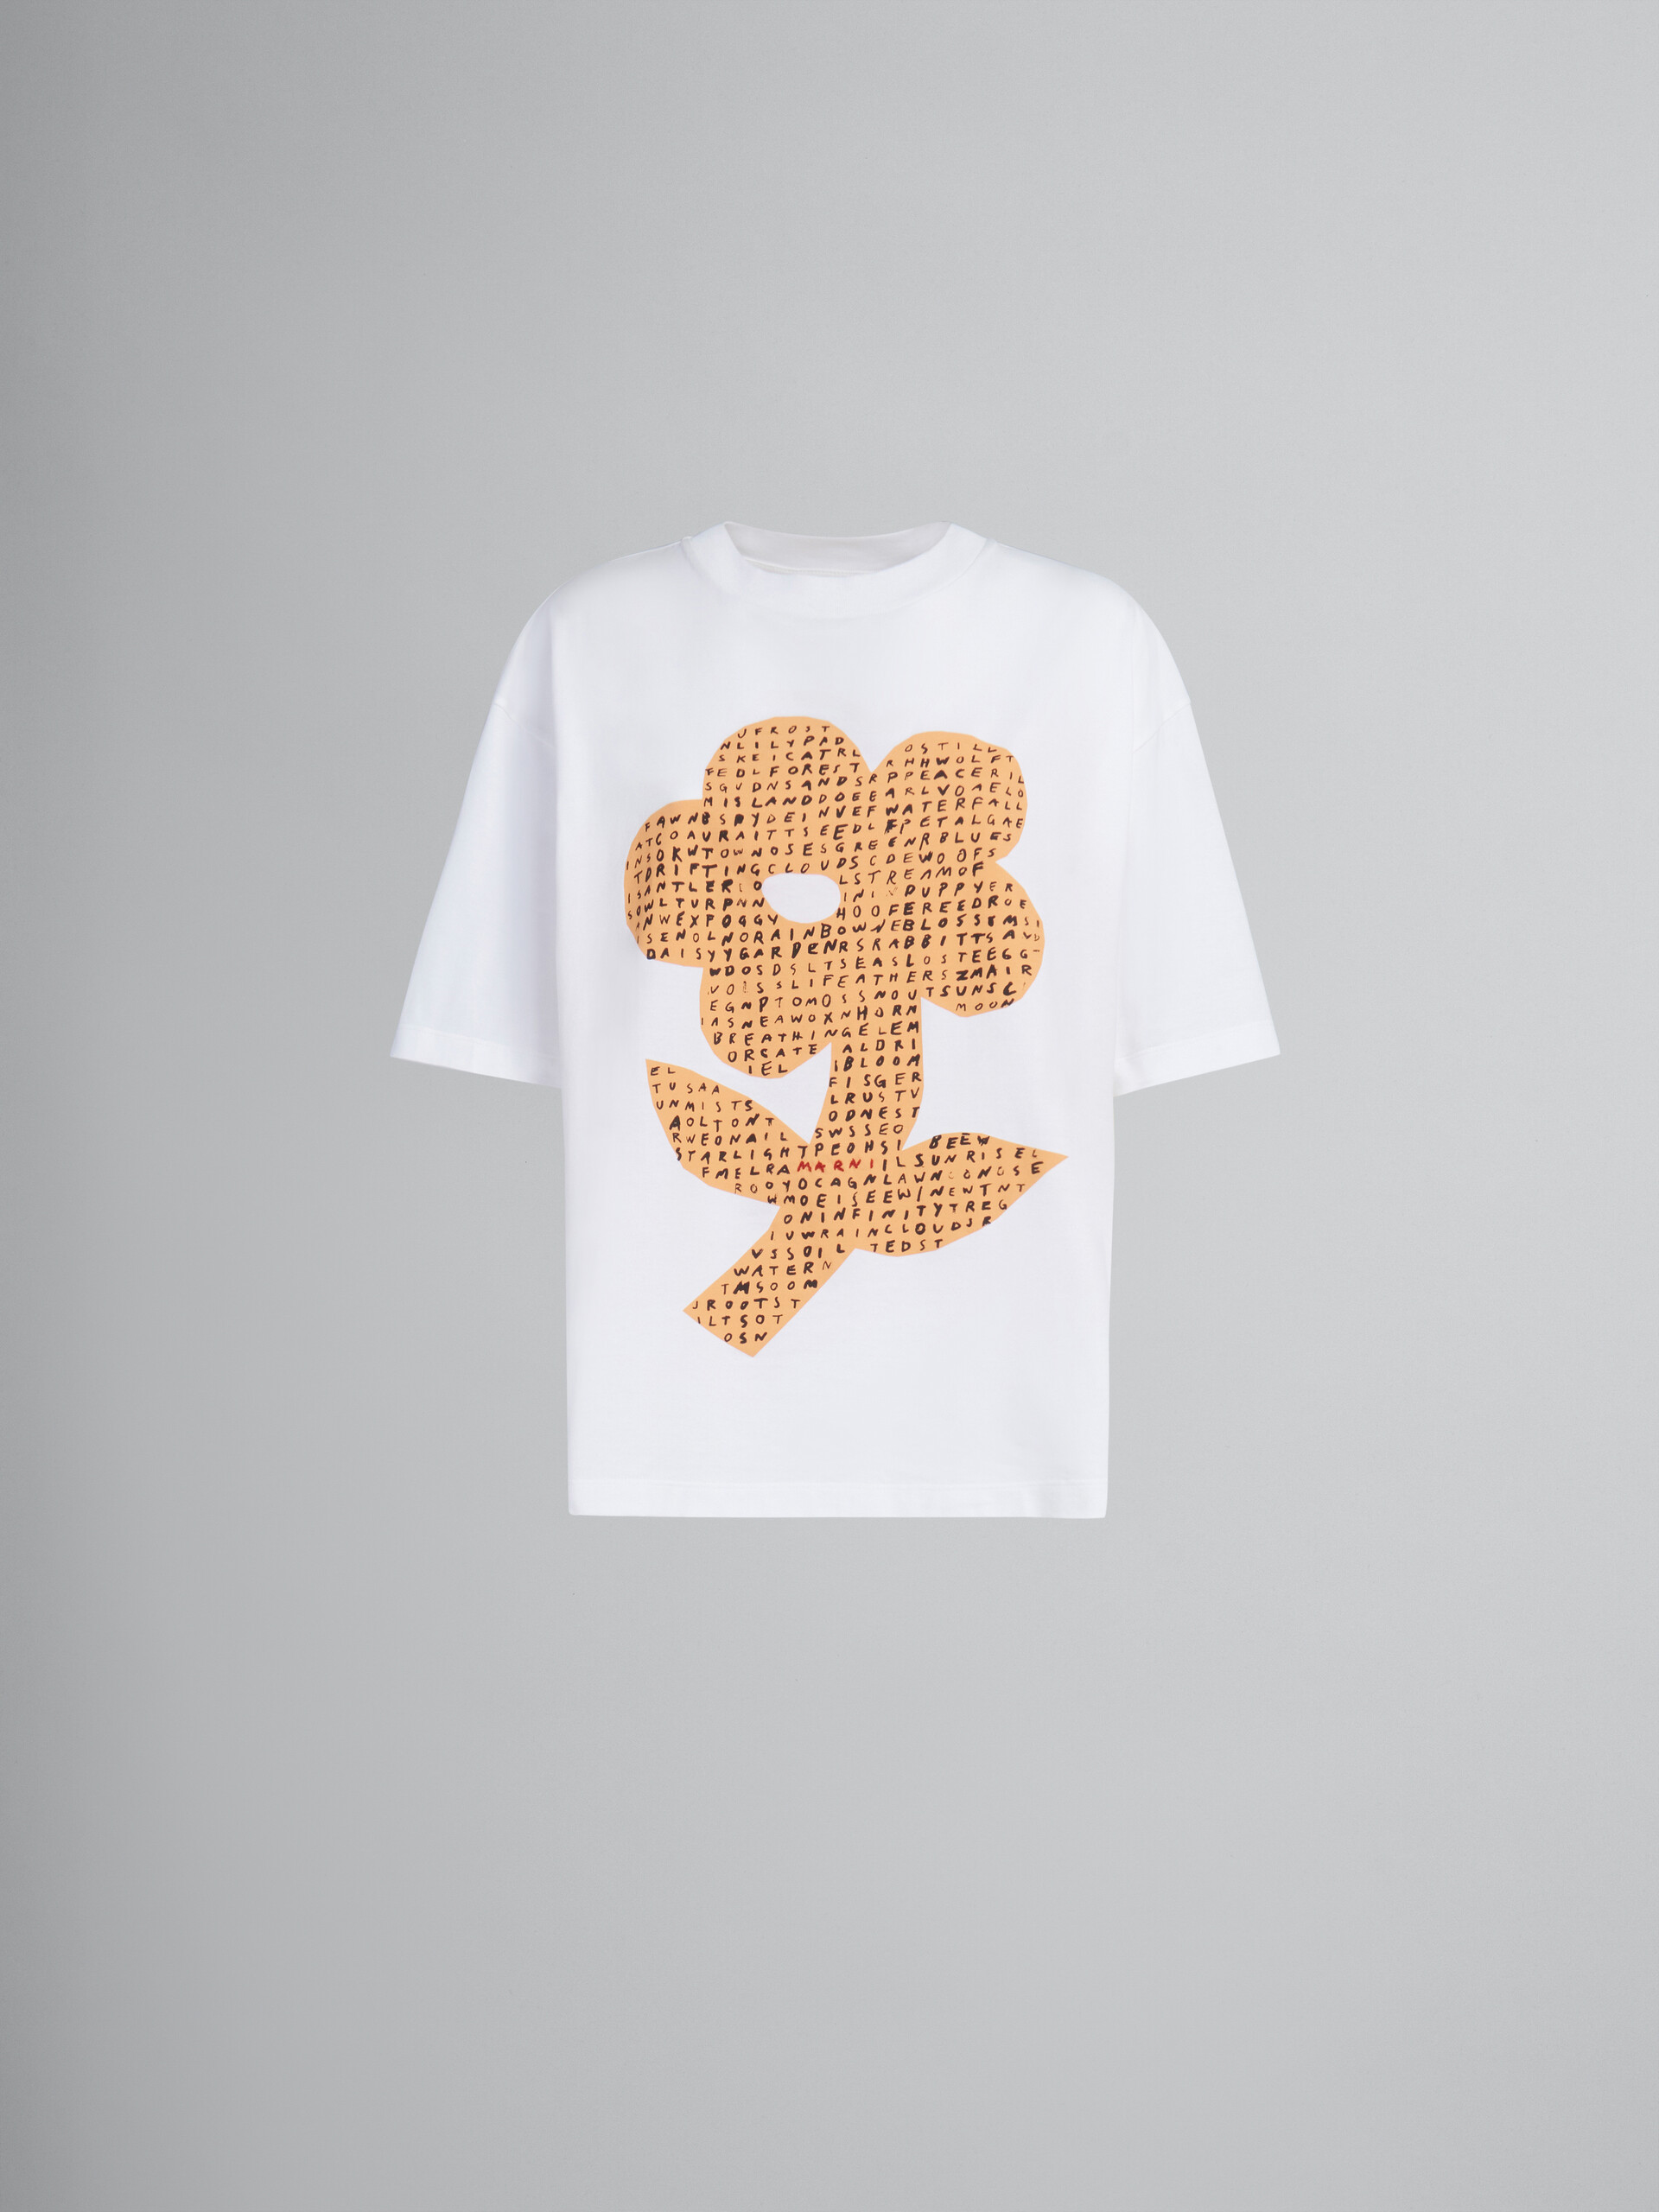 T-shirt in cotone biologico bianco con stampa a fiore - T-shirt - Image 1